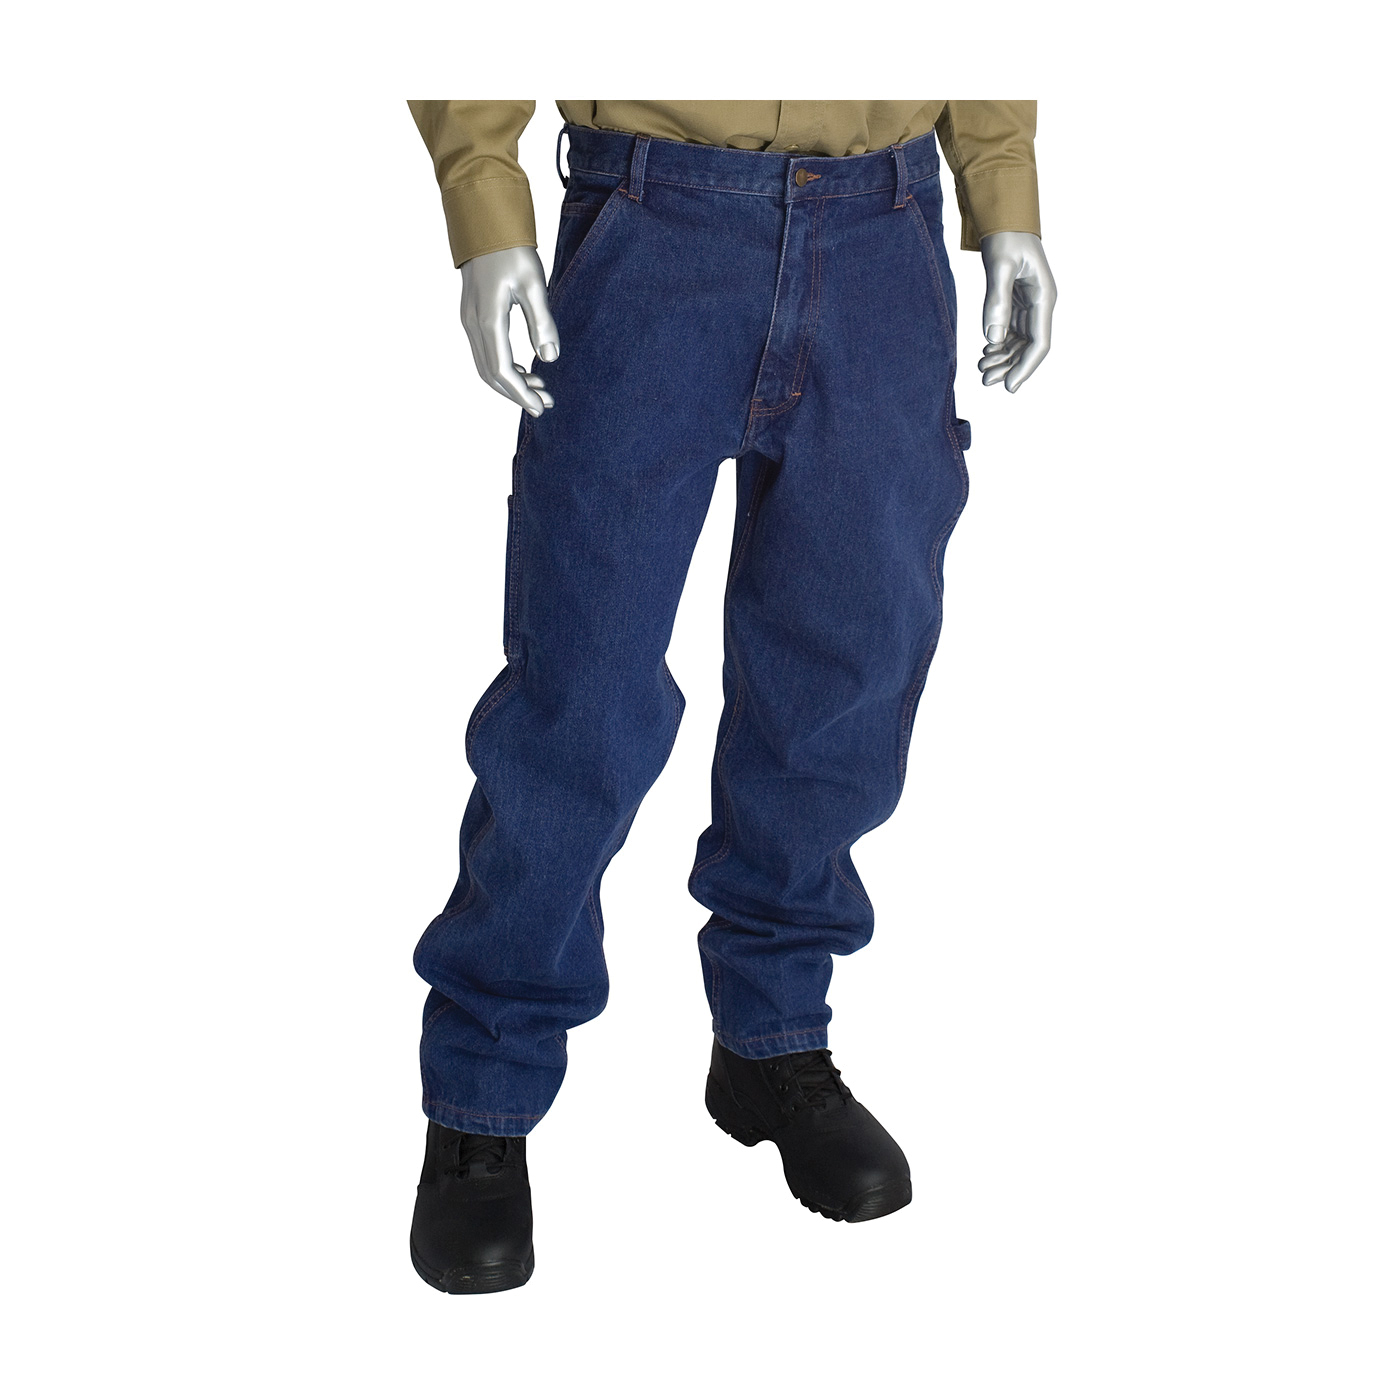 PIP® 385-FRCJ-4834 Carpenter Jeans, 48 in Waist, 34 in L Inseam, Blue Denim, Cotton